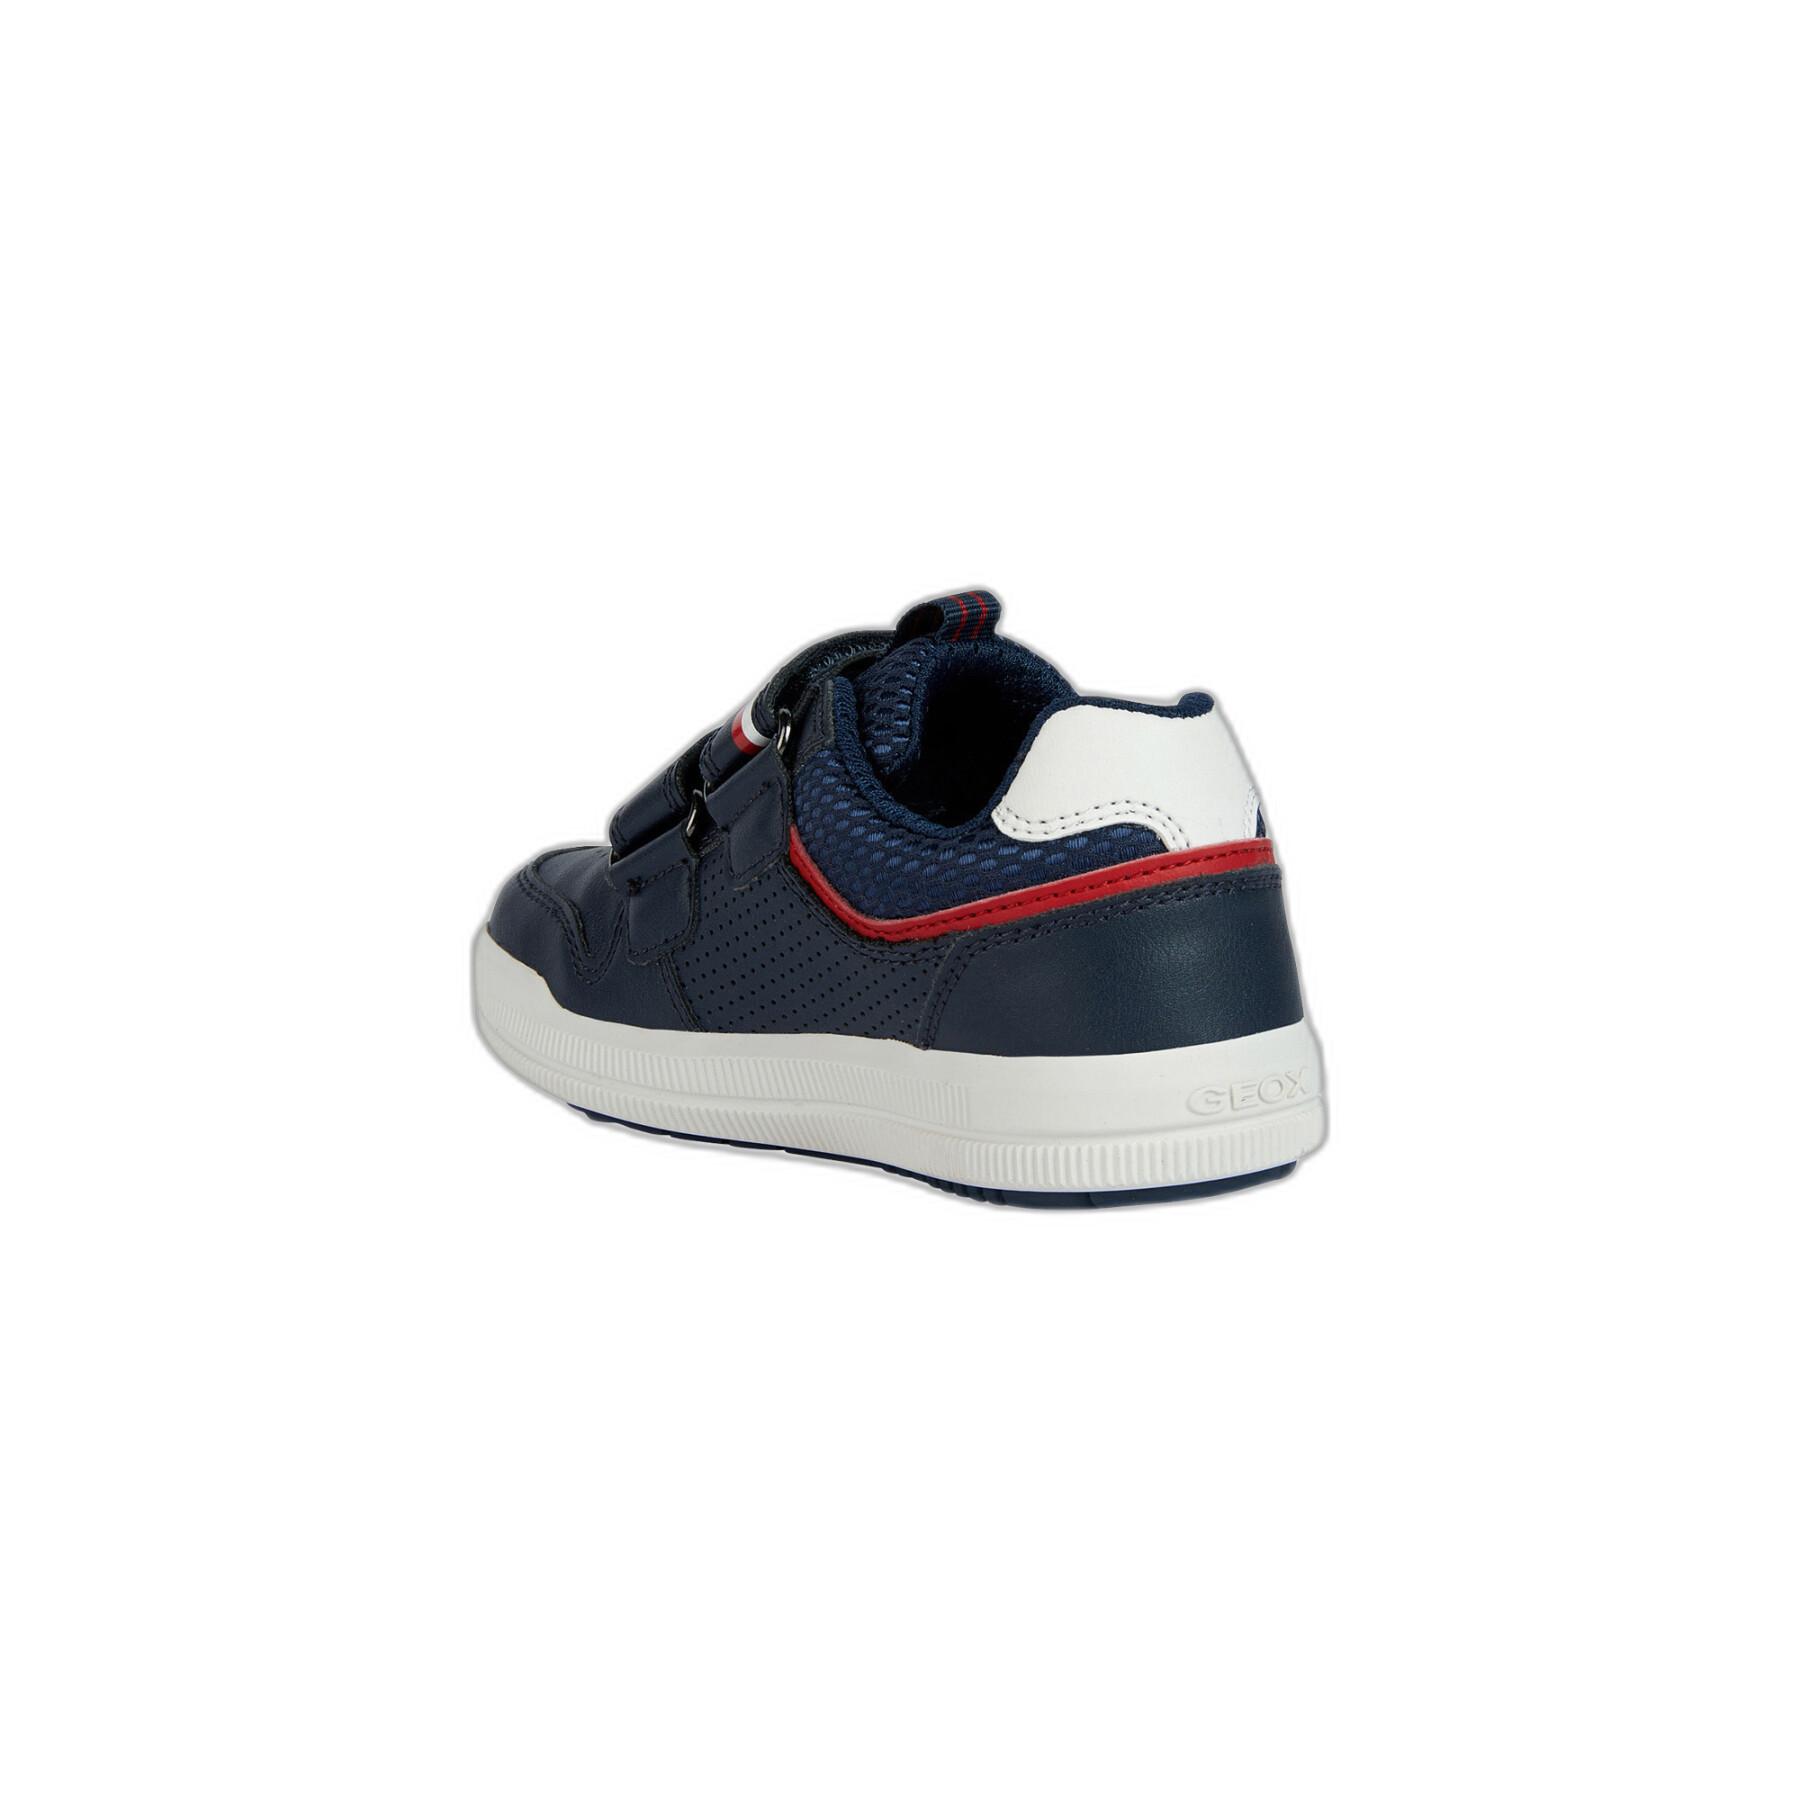 Baby boy sneakers Geox Arzach